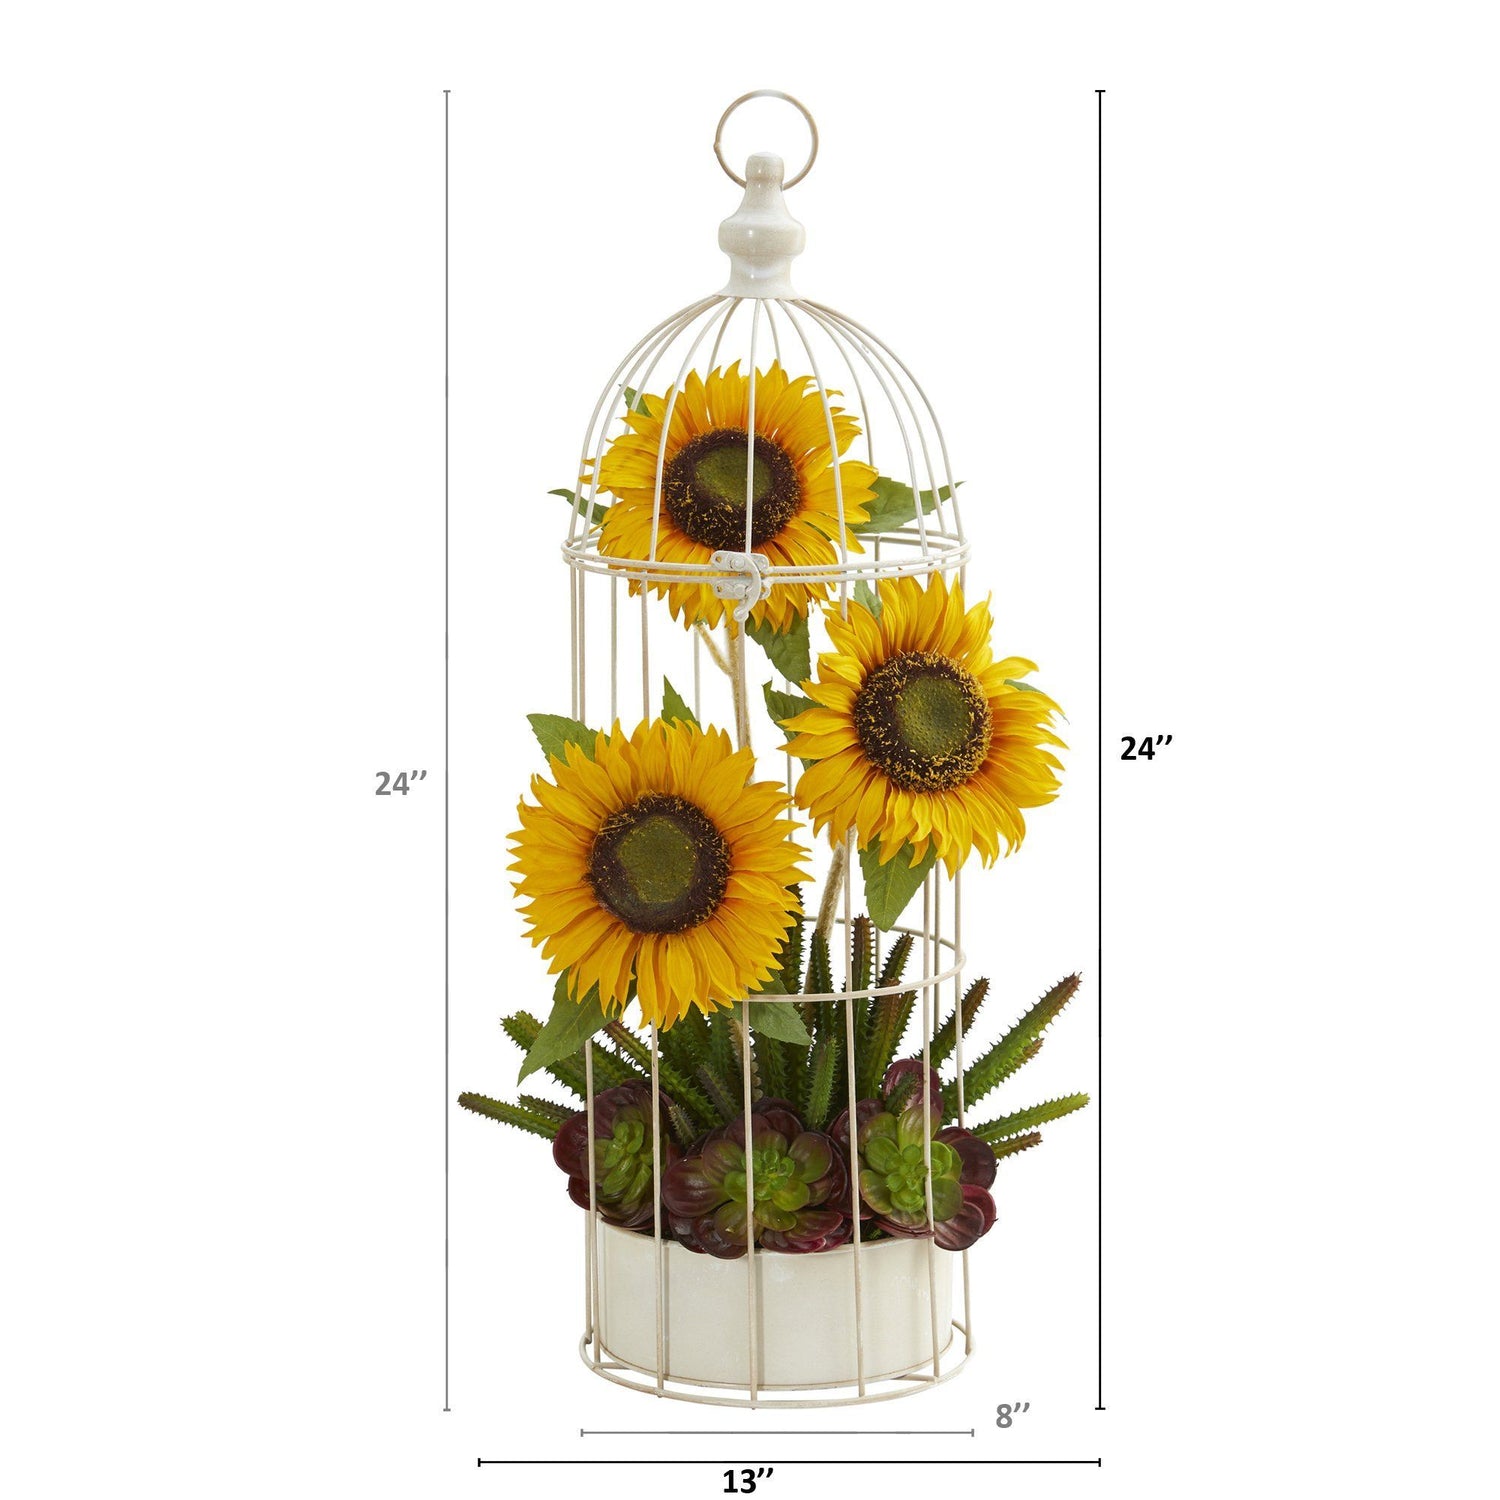 24” Sunflower, Cactus and Echeveria Artificial Arrangement in Decorative Cage